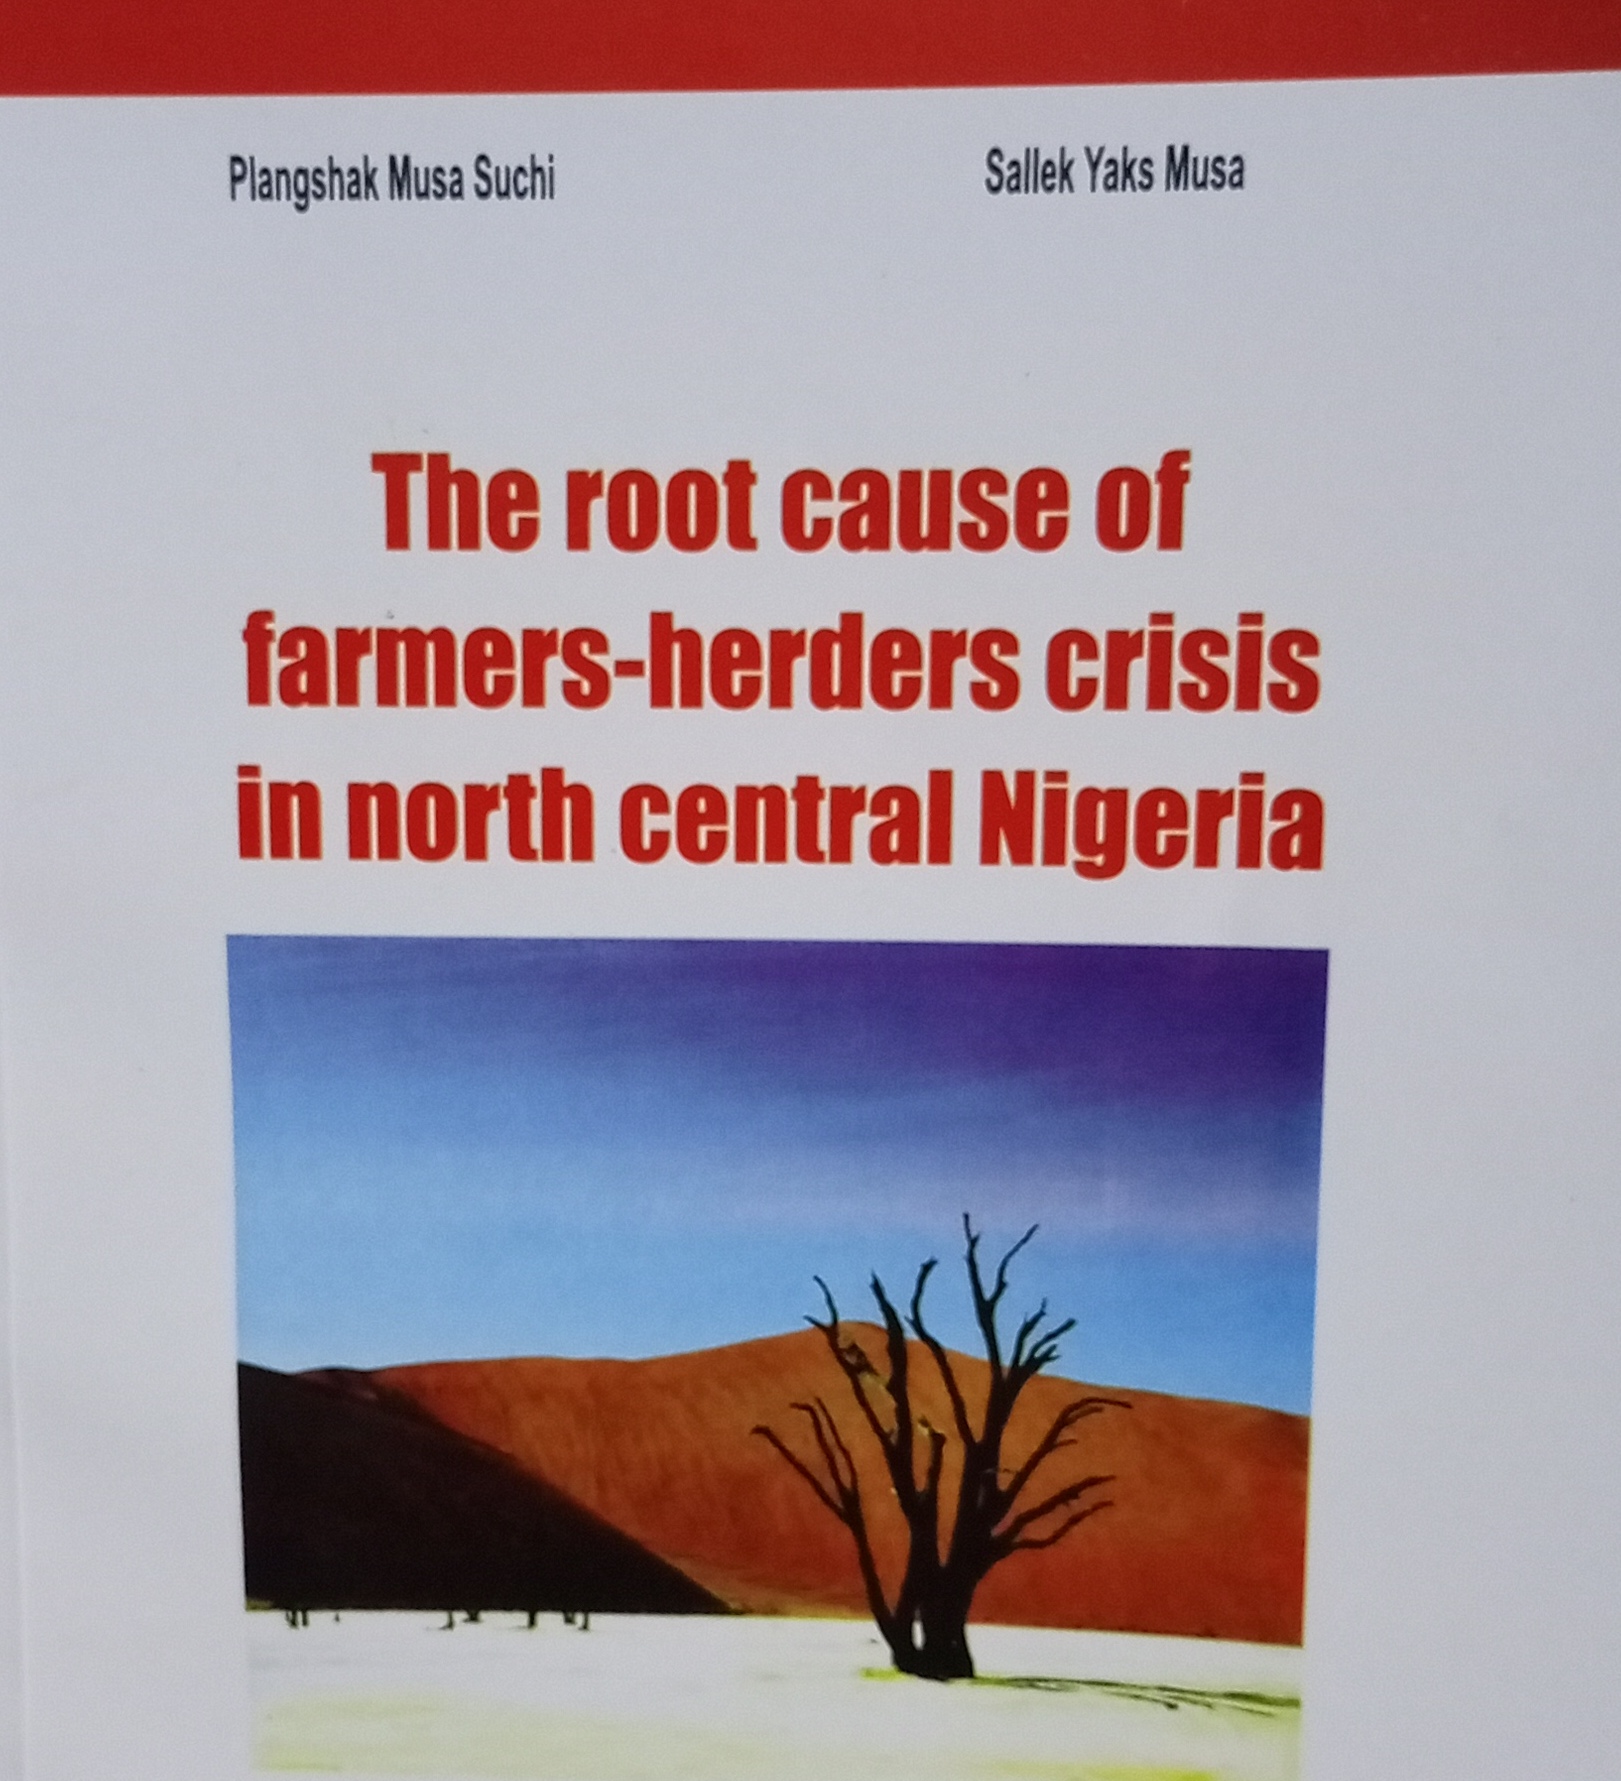 Blame Buhari, Audu Ogbeh for Escalating Herders-Farmers Conflict in Nigeria - Prof Jibrin Ibrahim (2)